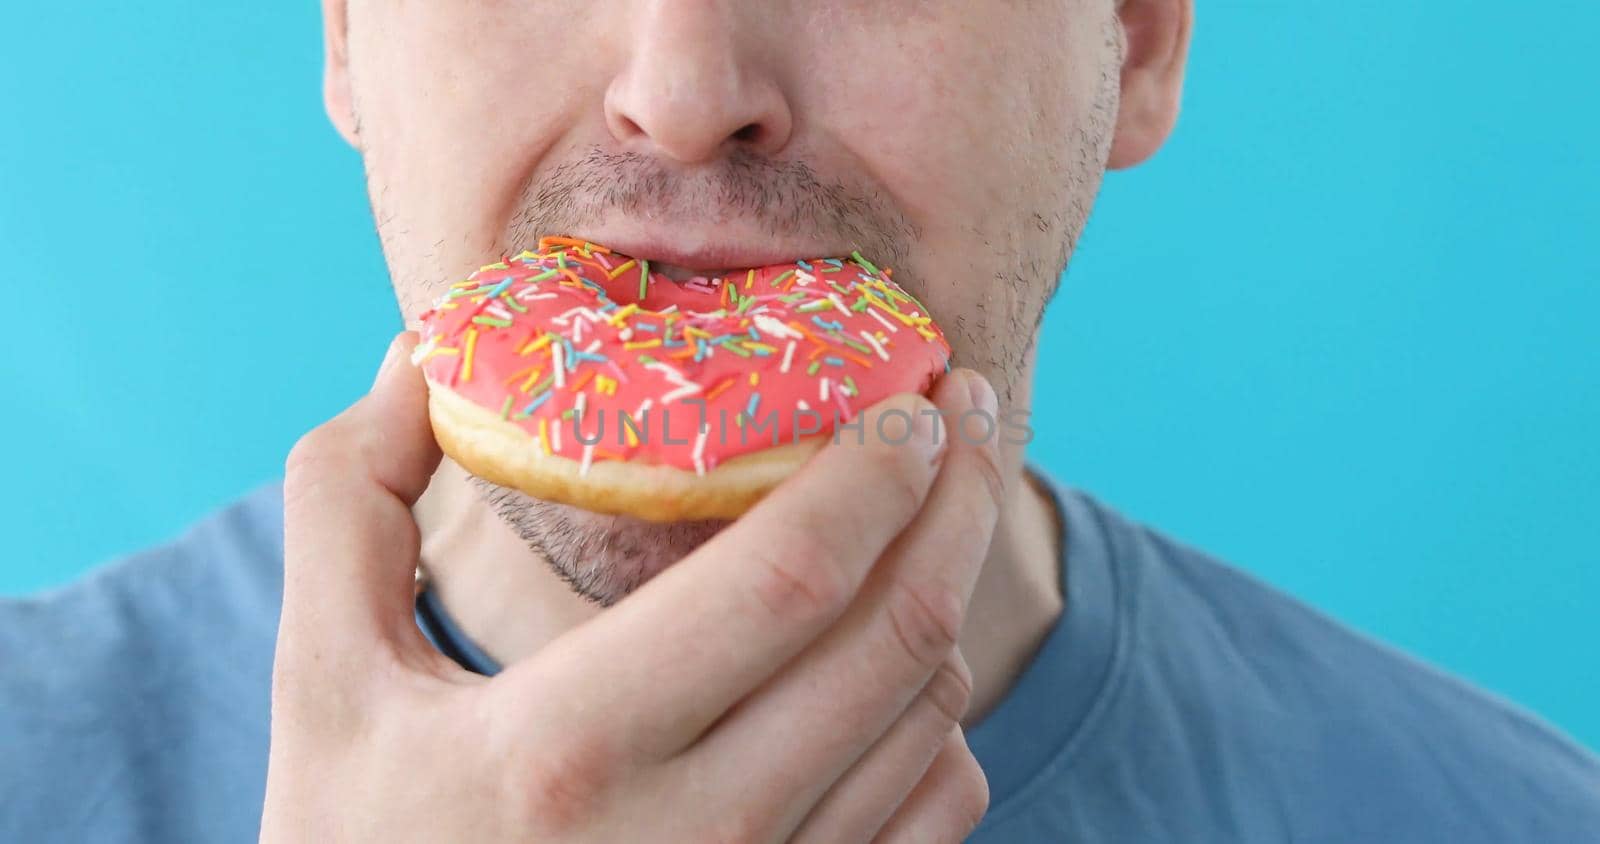 Man eat donut closeup on a blue background by Demkat